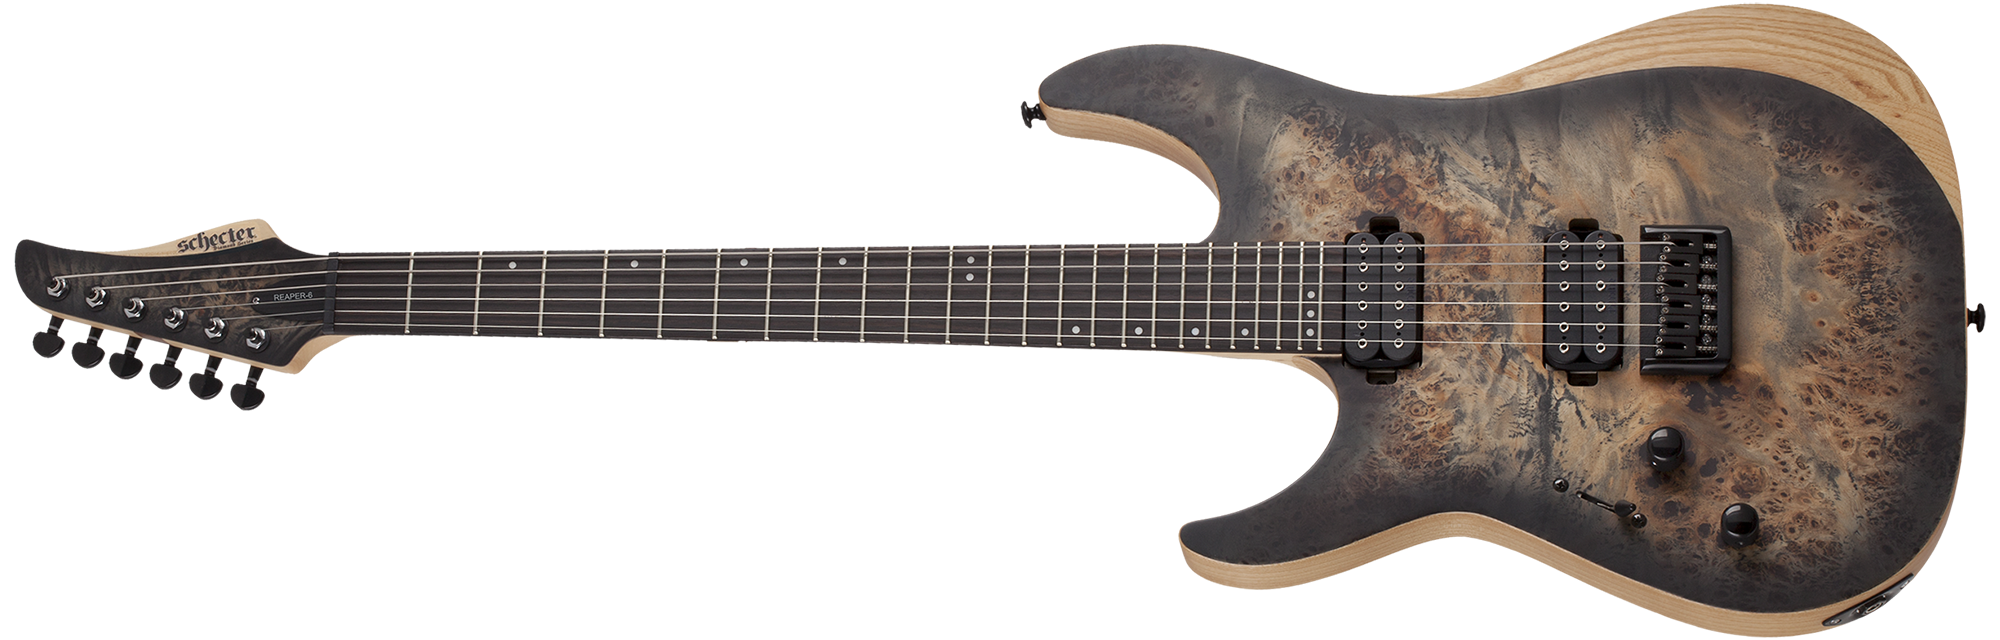 SCHECTER Reaper-6 LH LEFT HANDED Satin Charcoal Burst SKU 1512 - The Guitar World